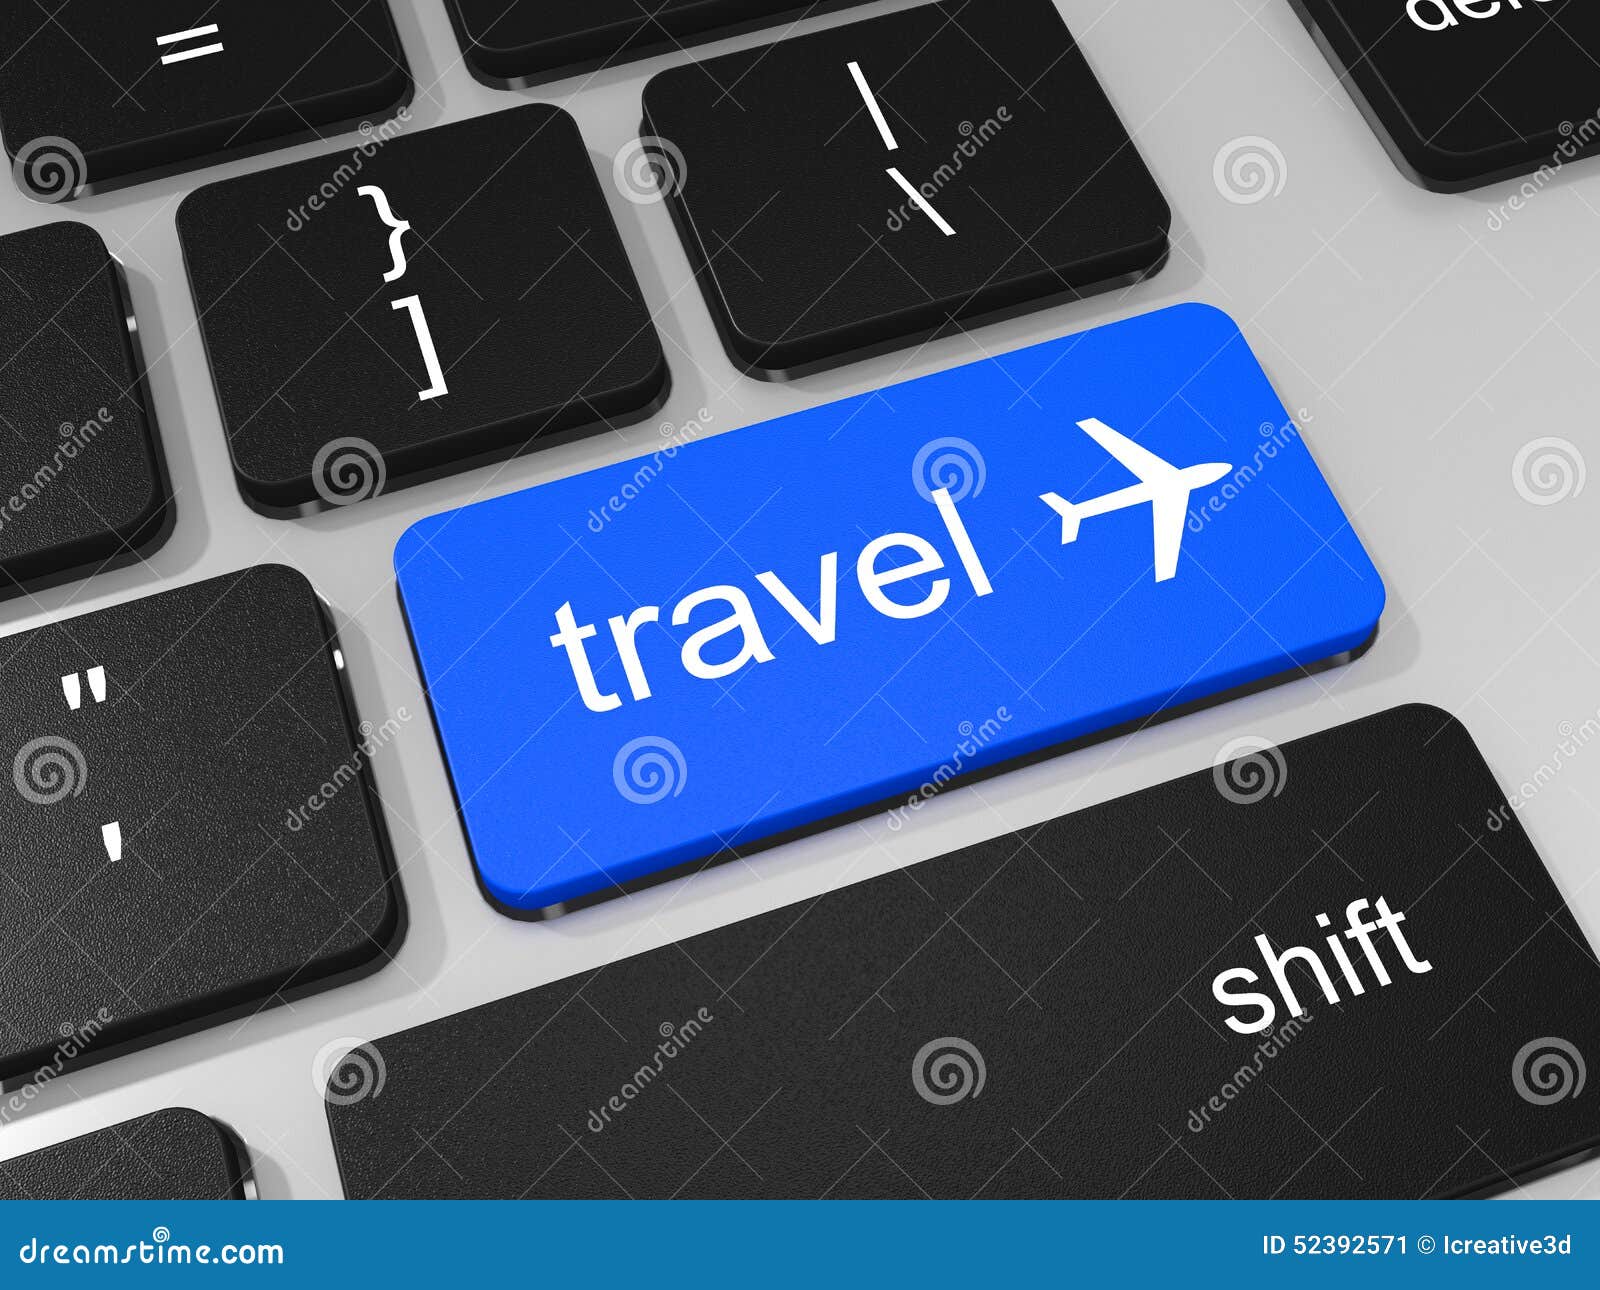 key travel laptop